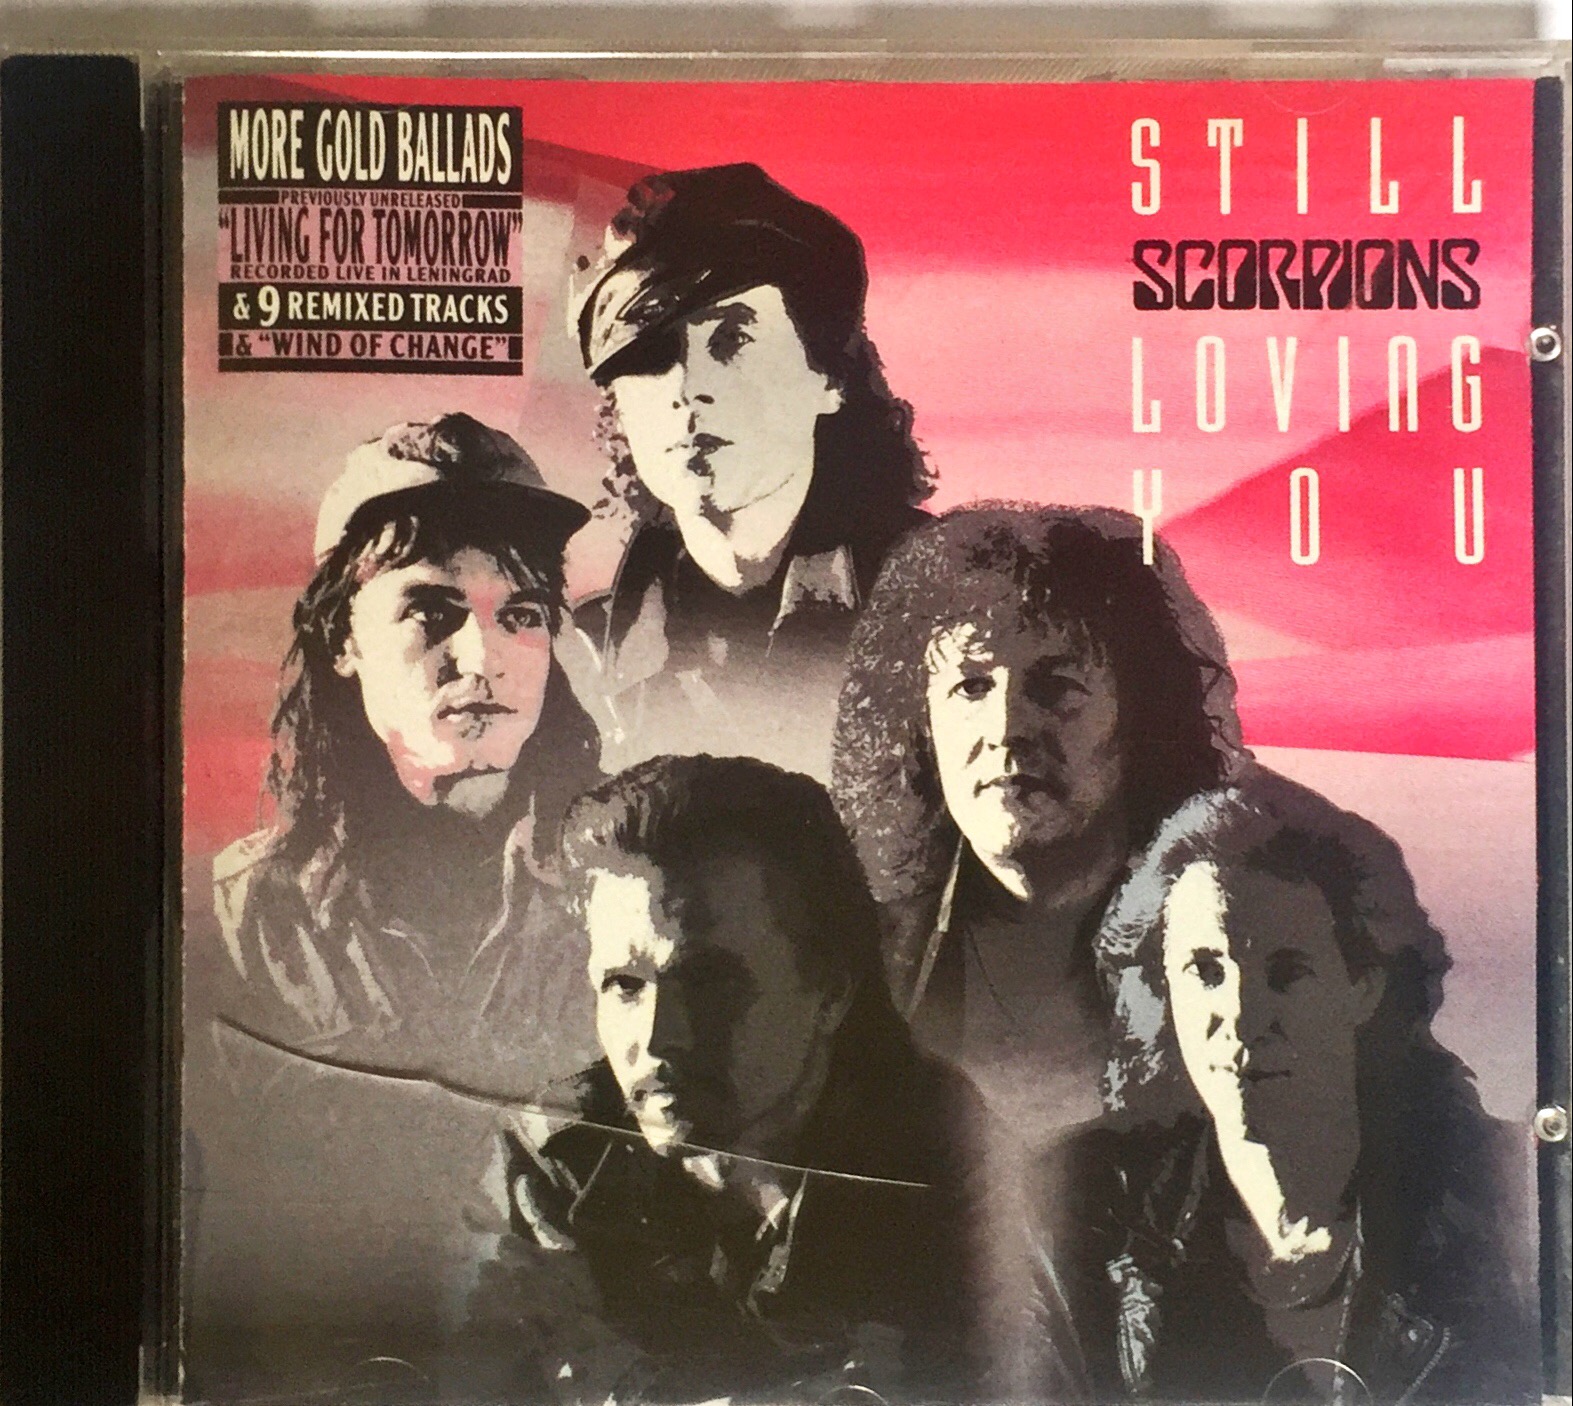 L still loving you. Группа скорпионс 1984. Scorpions Love at first Sting 1984. Scorpions "still loving you" 1992 обложка. Scorpions still loving you 1984.